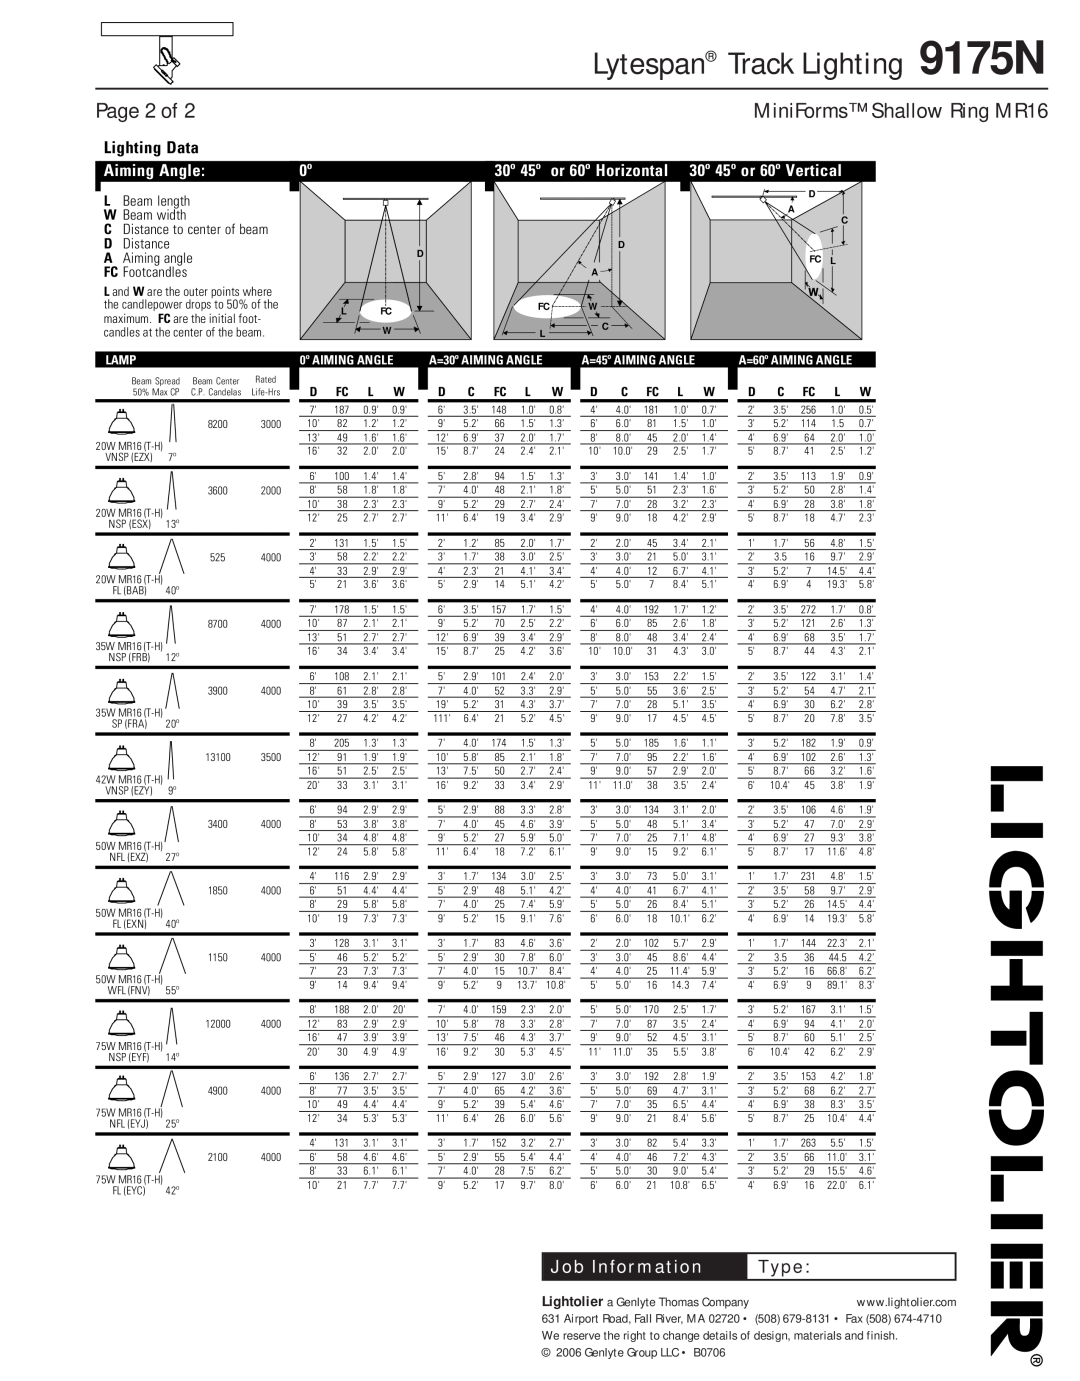 Lightolier Page 2 of, Lytespan Track Lighting 9175N, MiniForms Shallow Ring MR16, Lighting Data, Aiming Angle, Type 